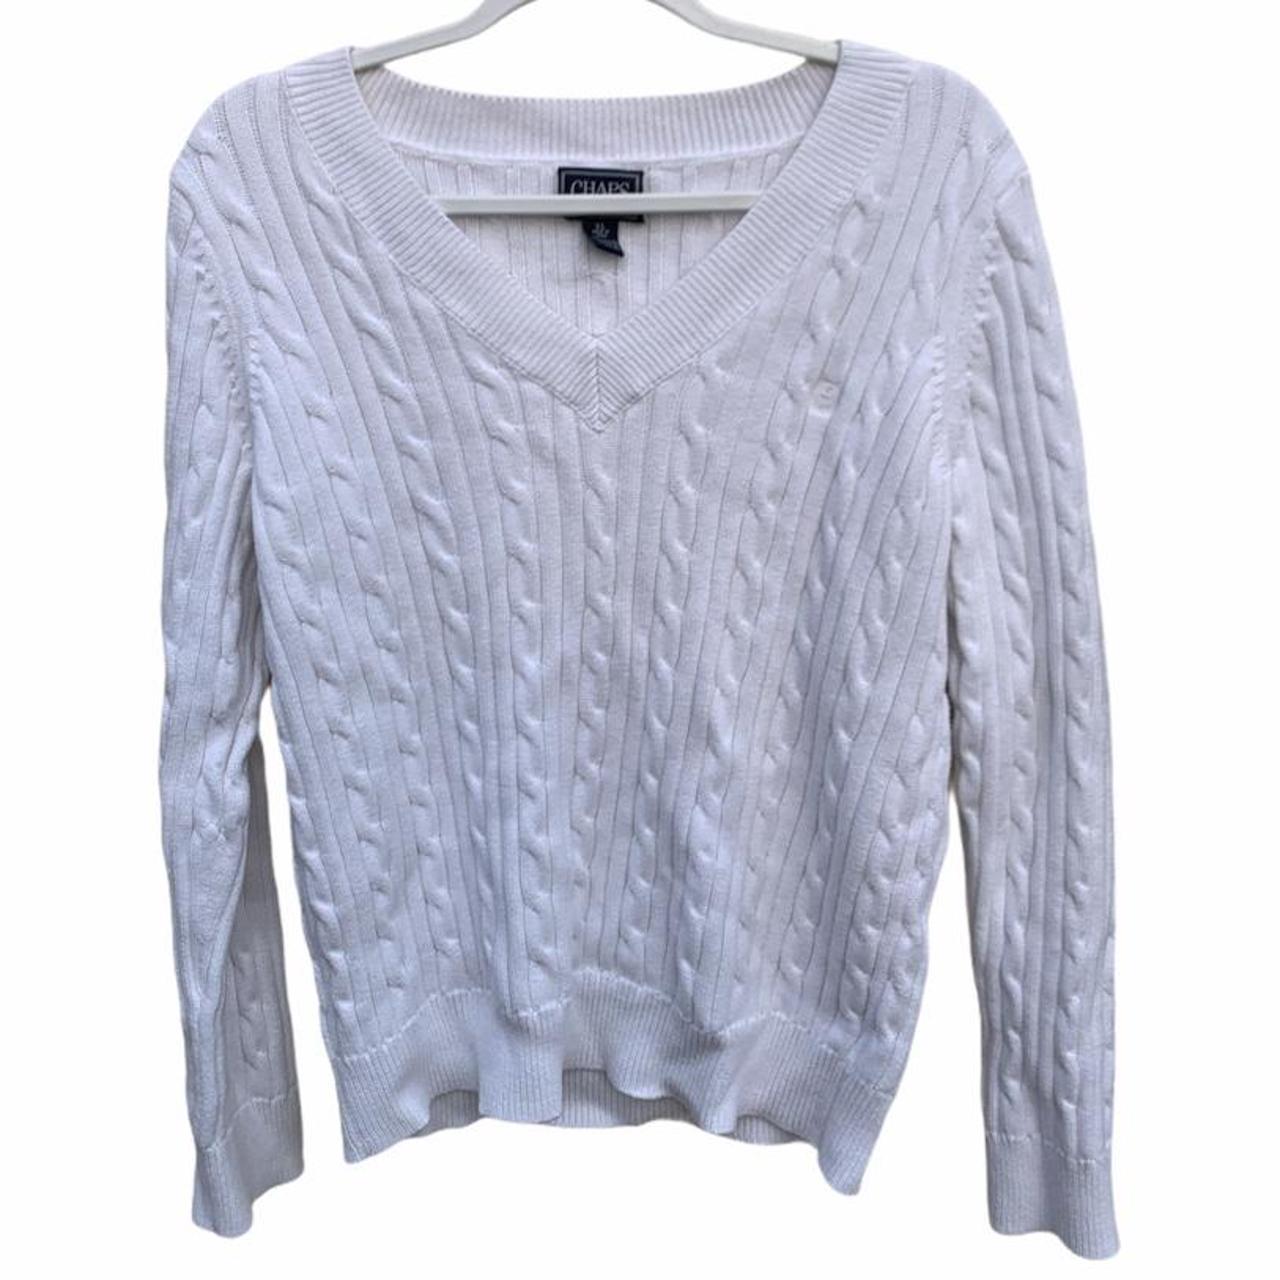 White Cable Knit Jumper Sweater V-Neck Long-sleeved... - Depop